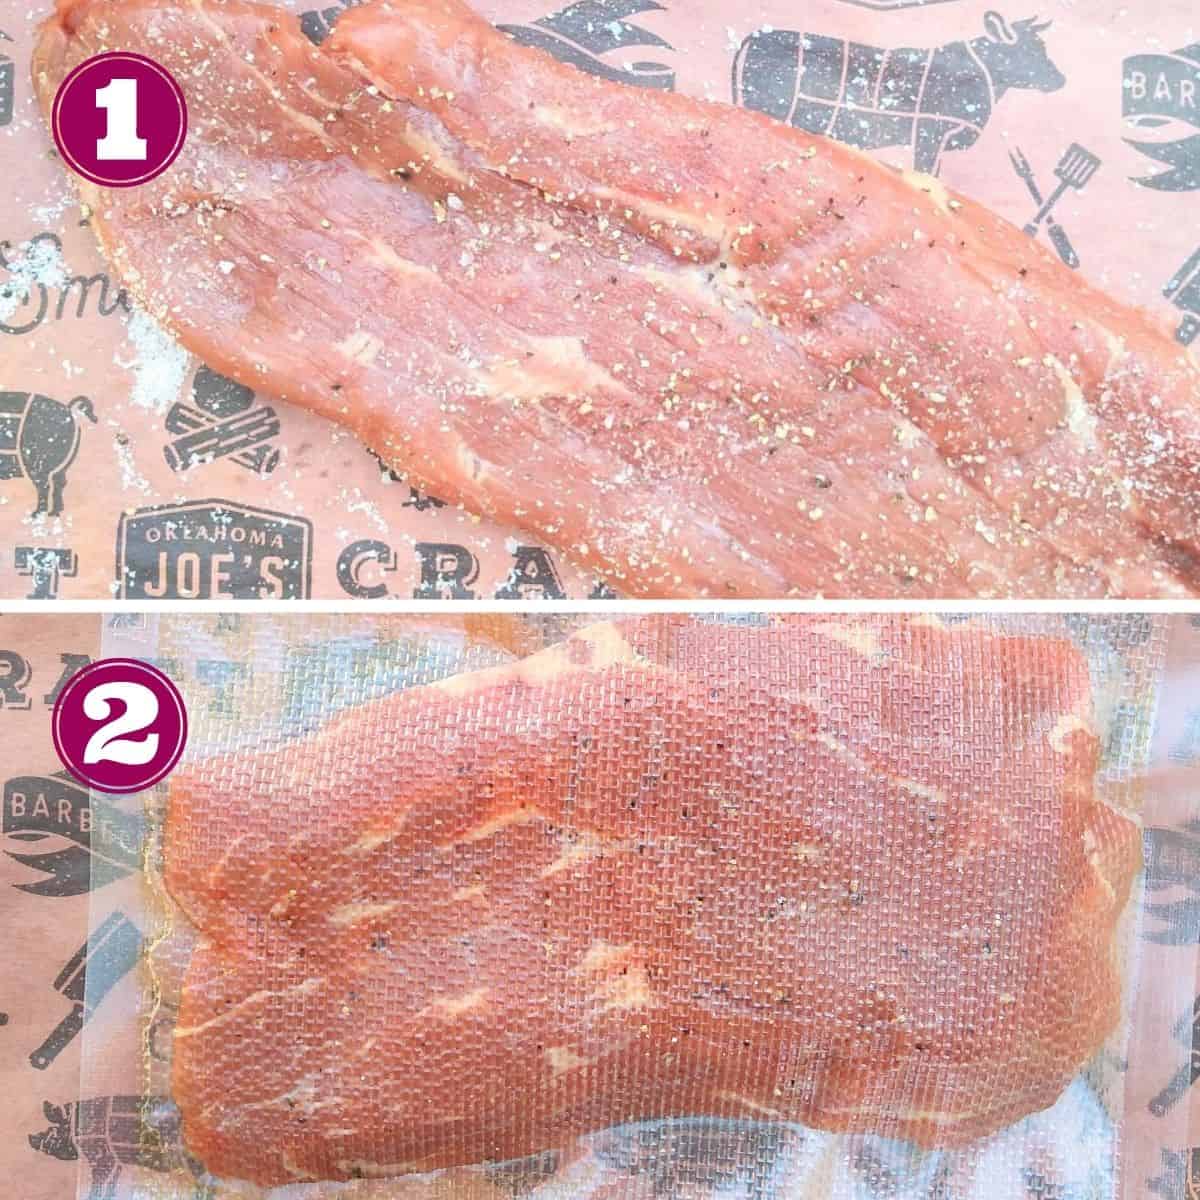 Step 1 shows a Sierra steak seasoned with kosher salt and black pepper
Step 2 shows a Sierra steak vacuum sealed in plastic